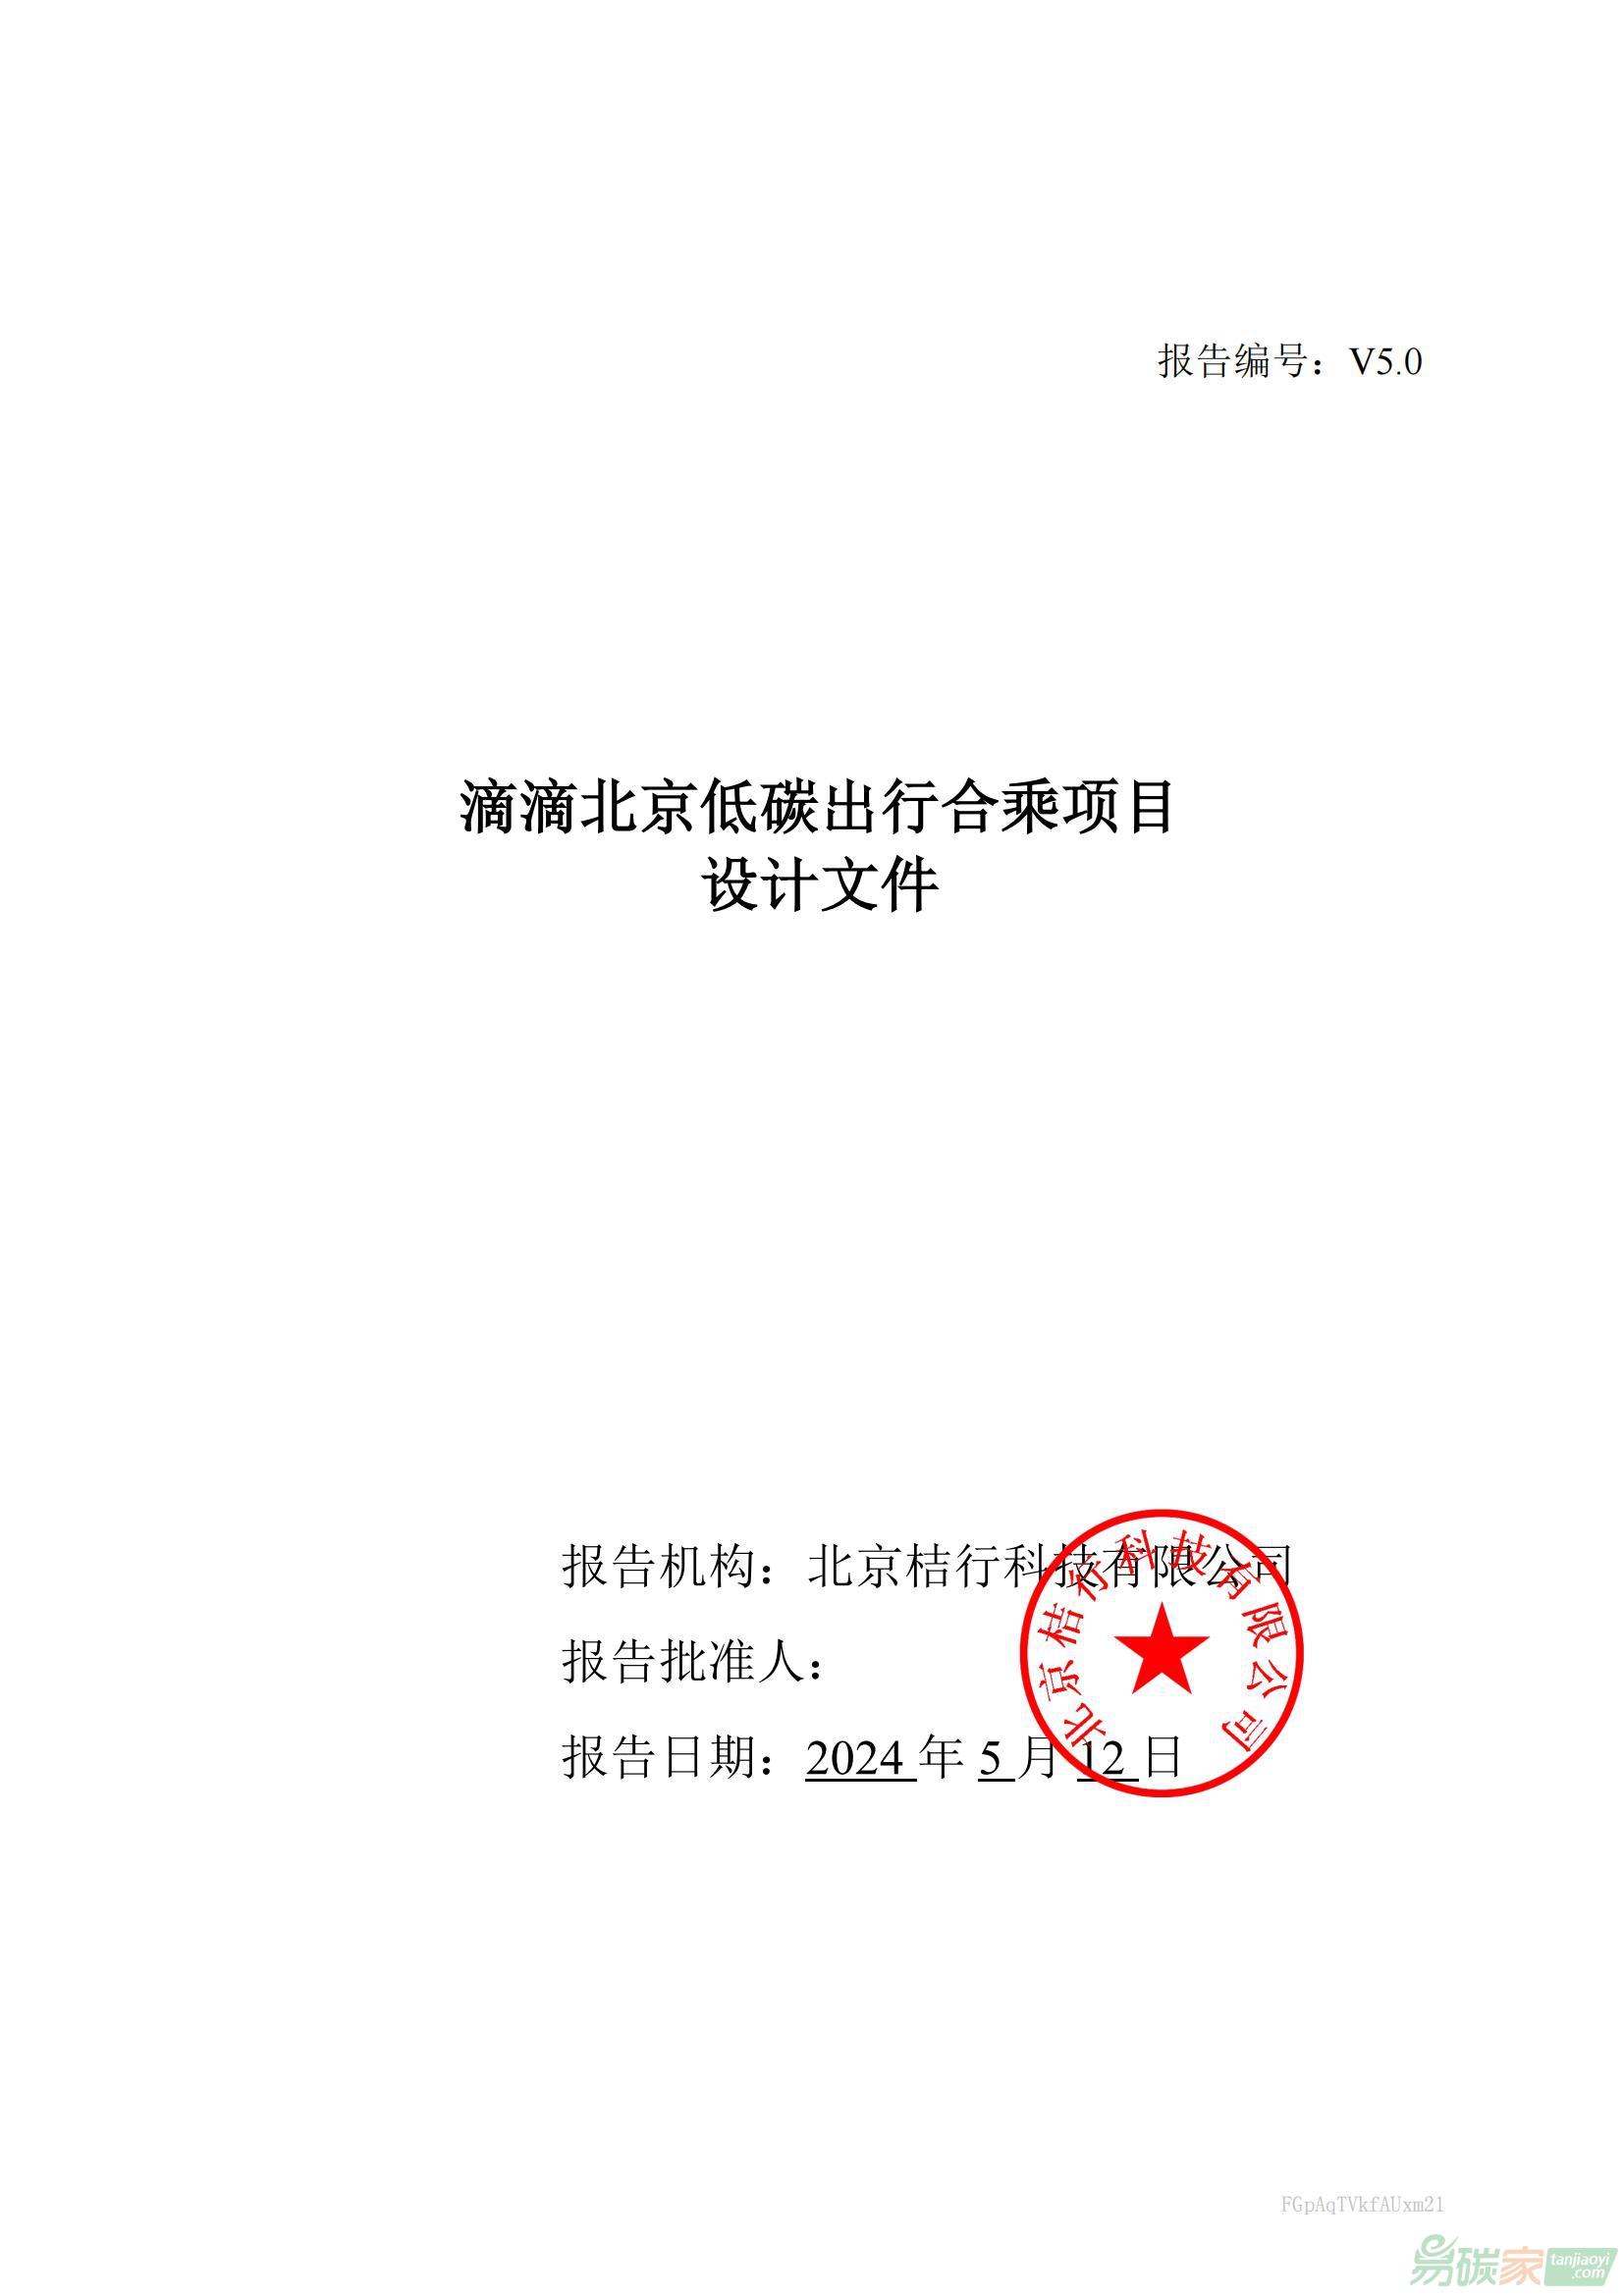 【BCER-PDD报告】北京市生态环境局关于滴滴北京低碳出行合乘项目设计文件的公示